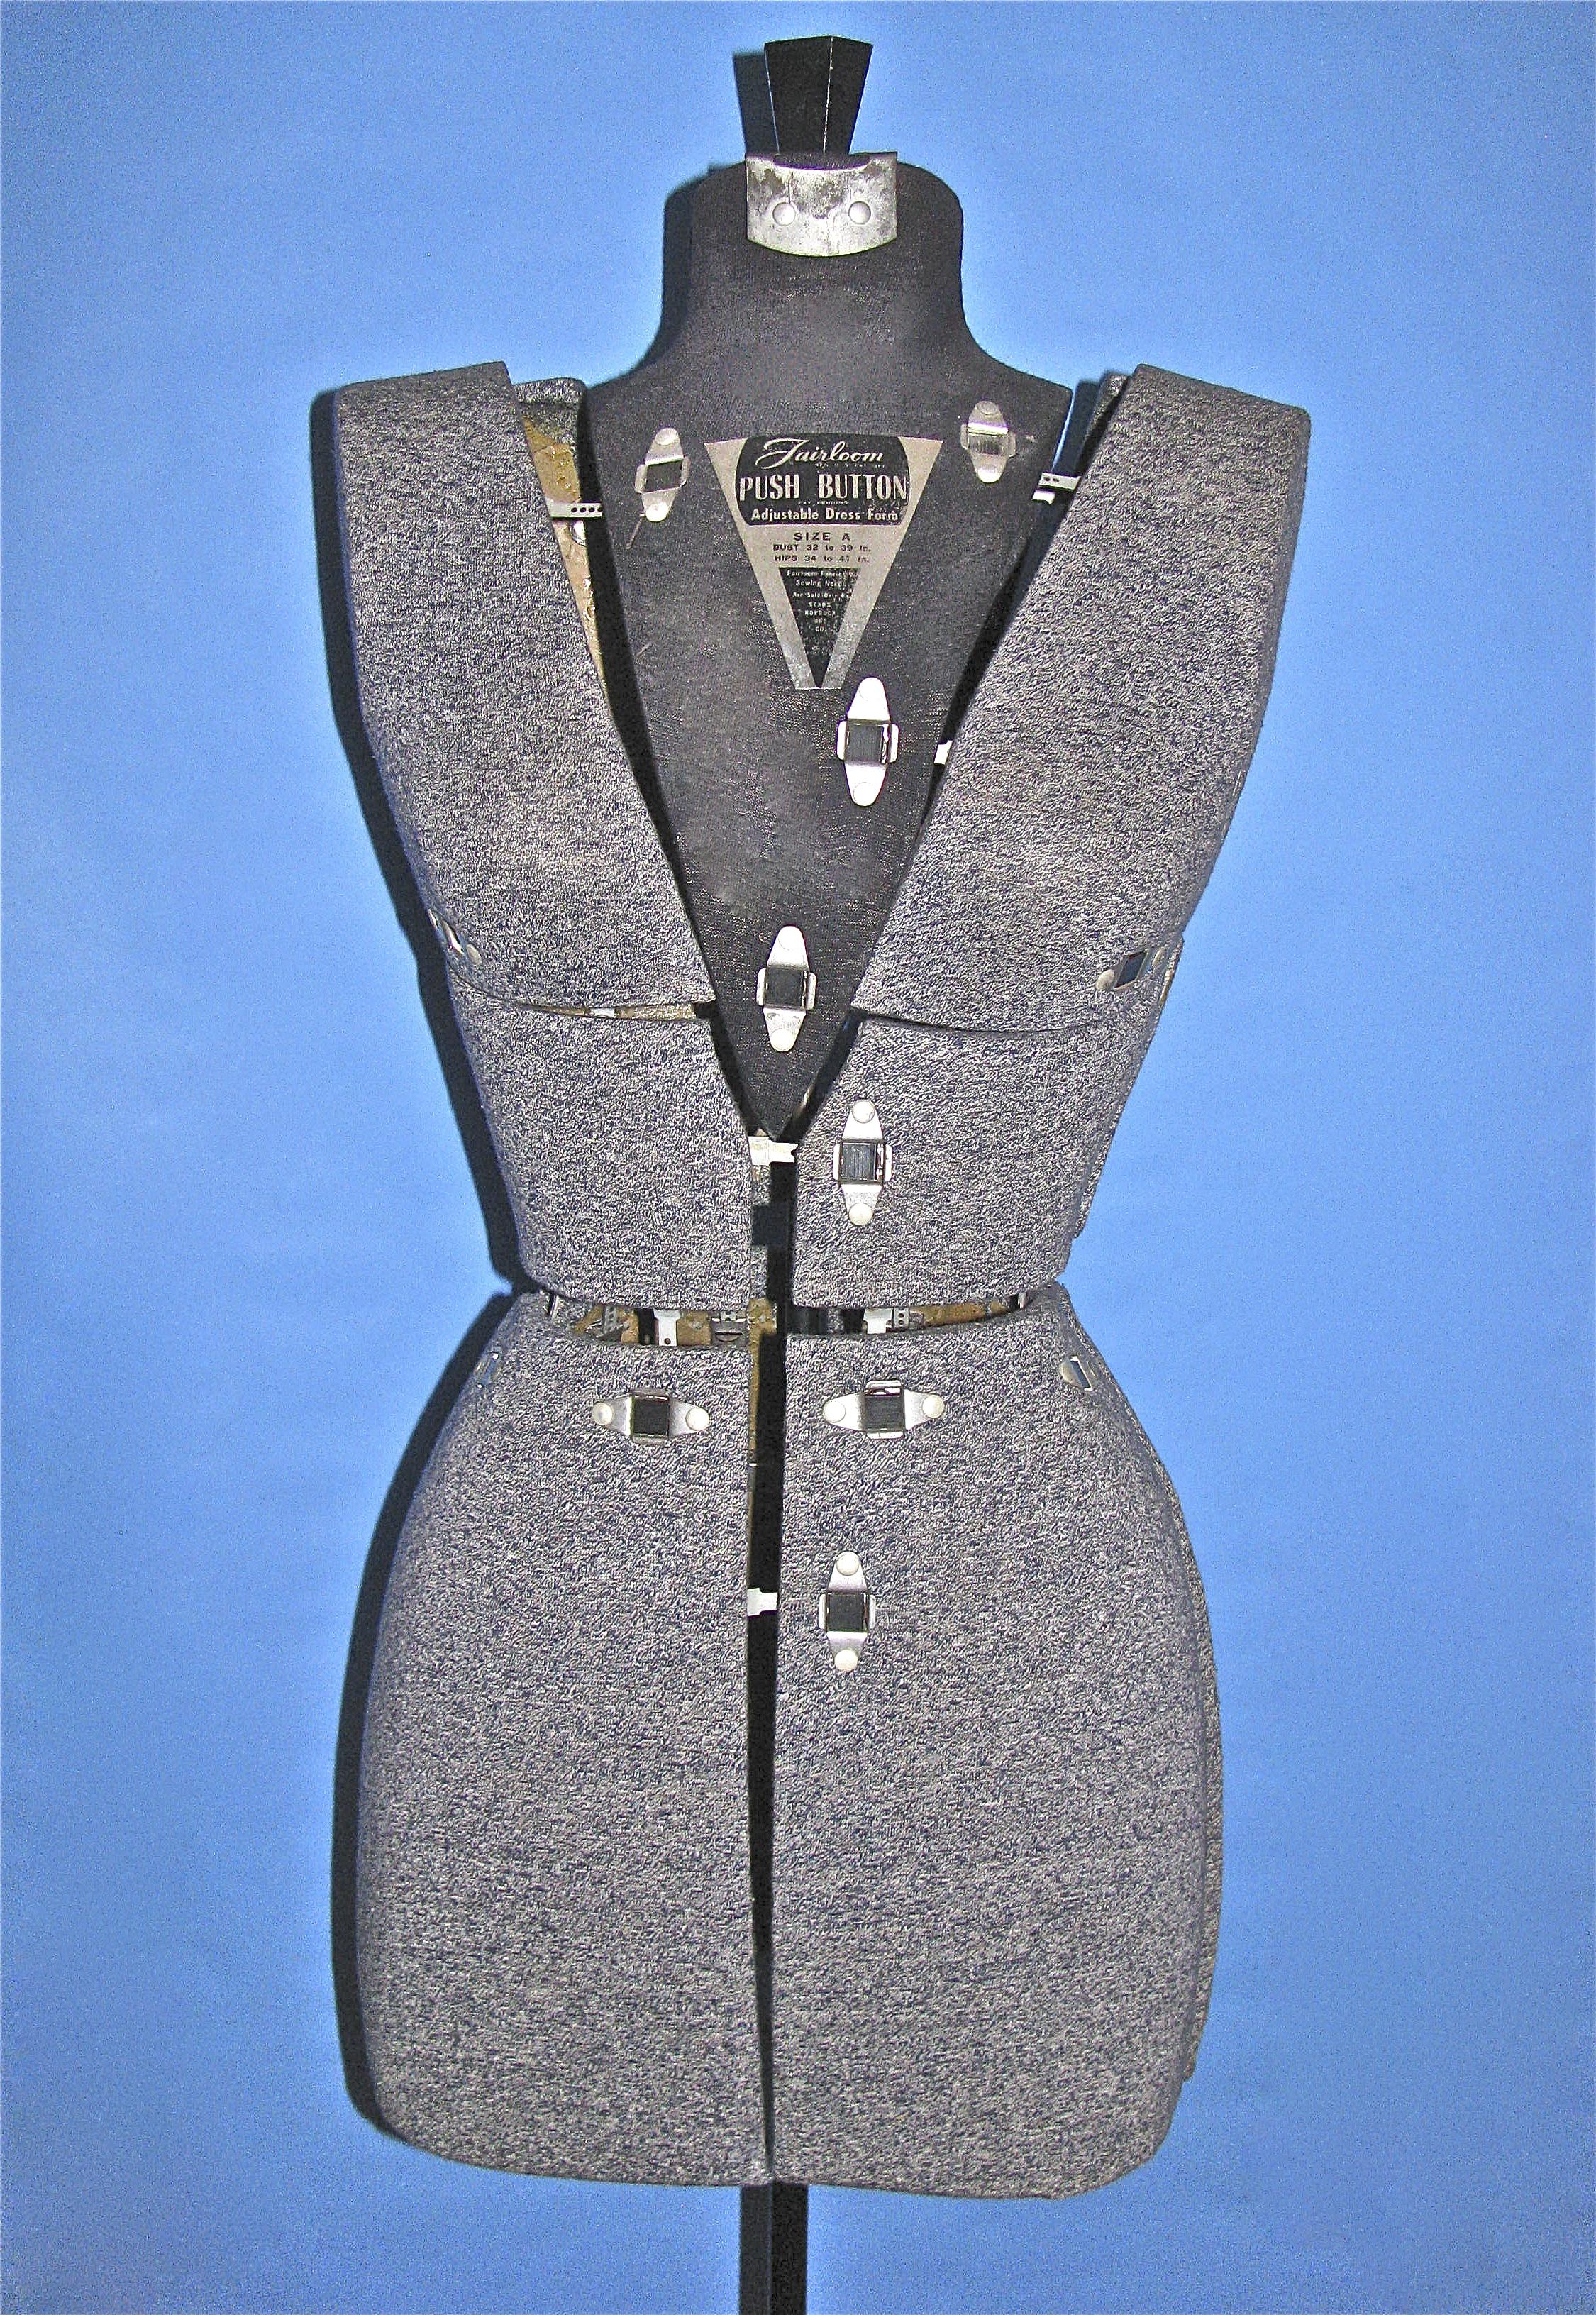 Fairloom push button adjustable dress form - UWDC - UW-Madison